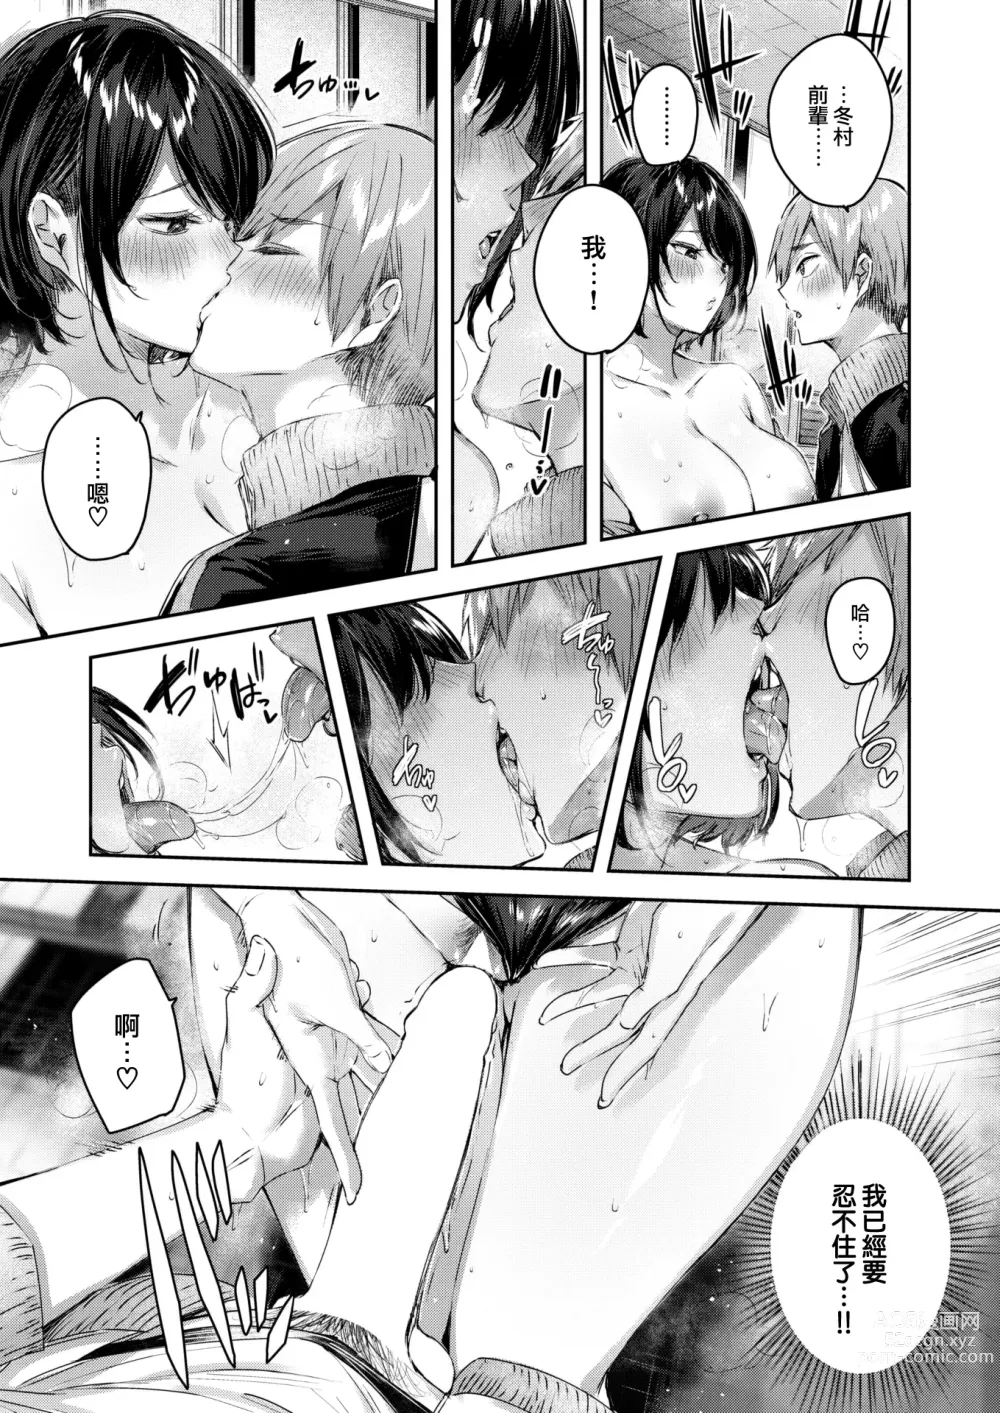 Page 17 of manga Cold Fish